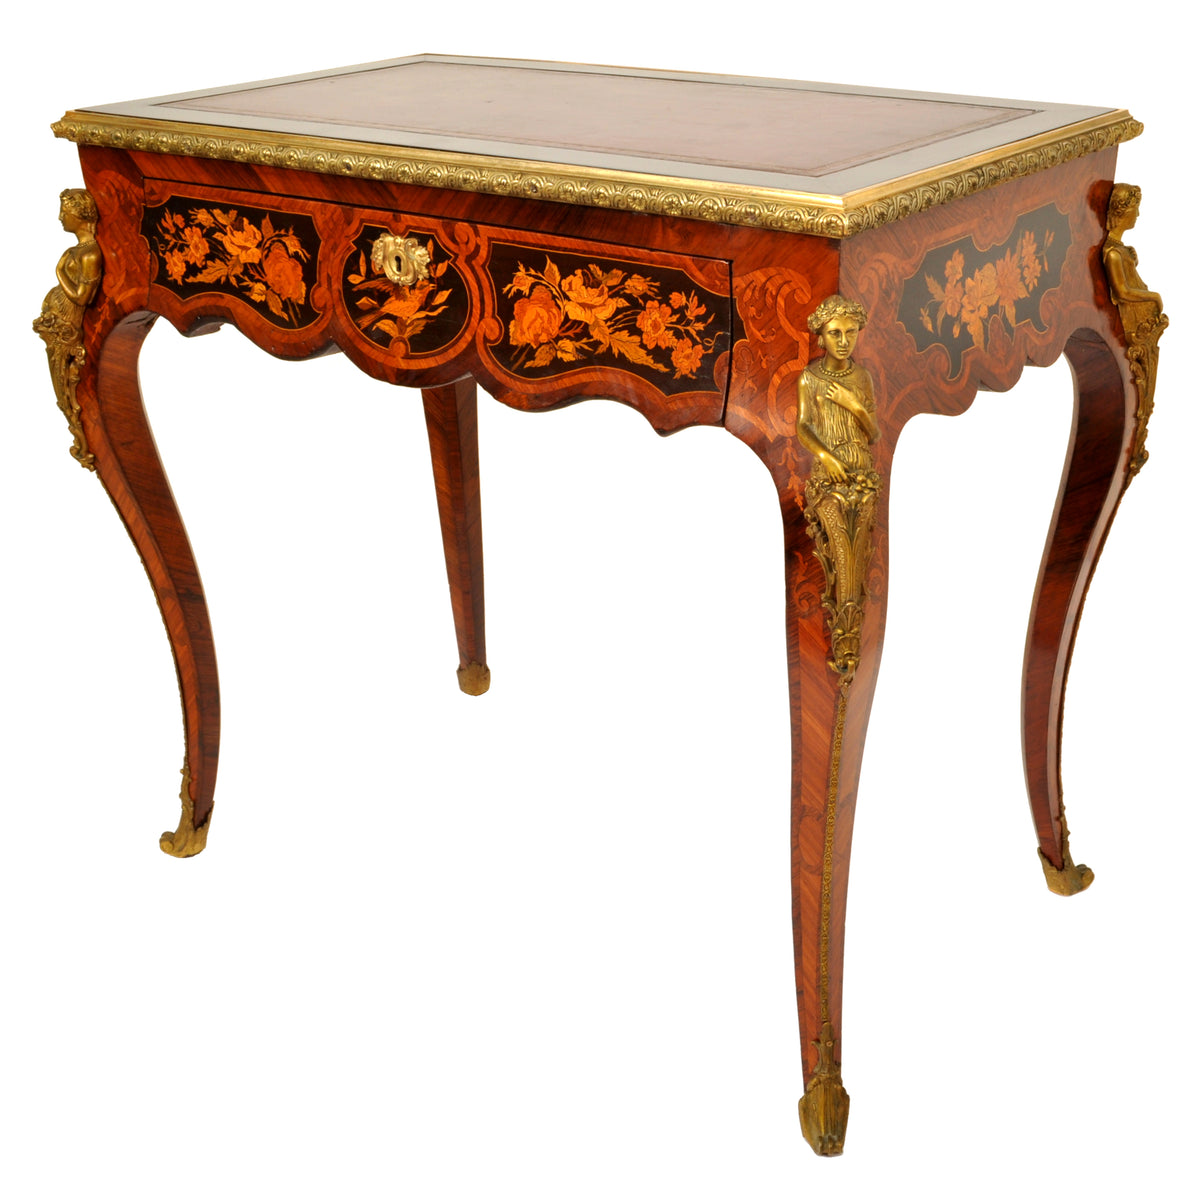 Antique 19th Century French Louis XVI Marquetry Ormolu Writing Desk / Table, circa 1895